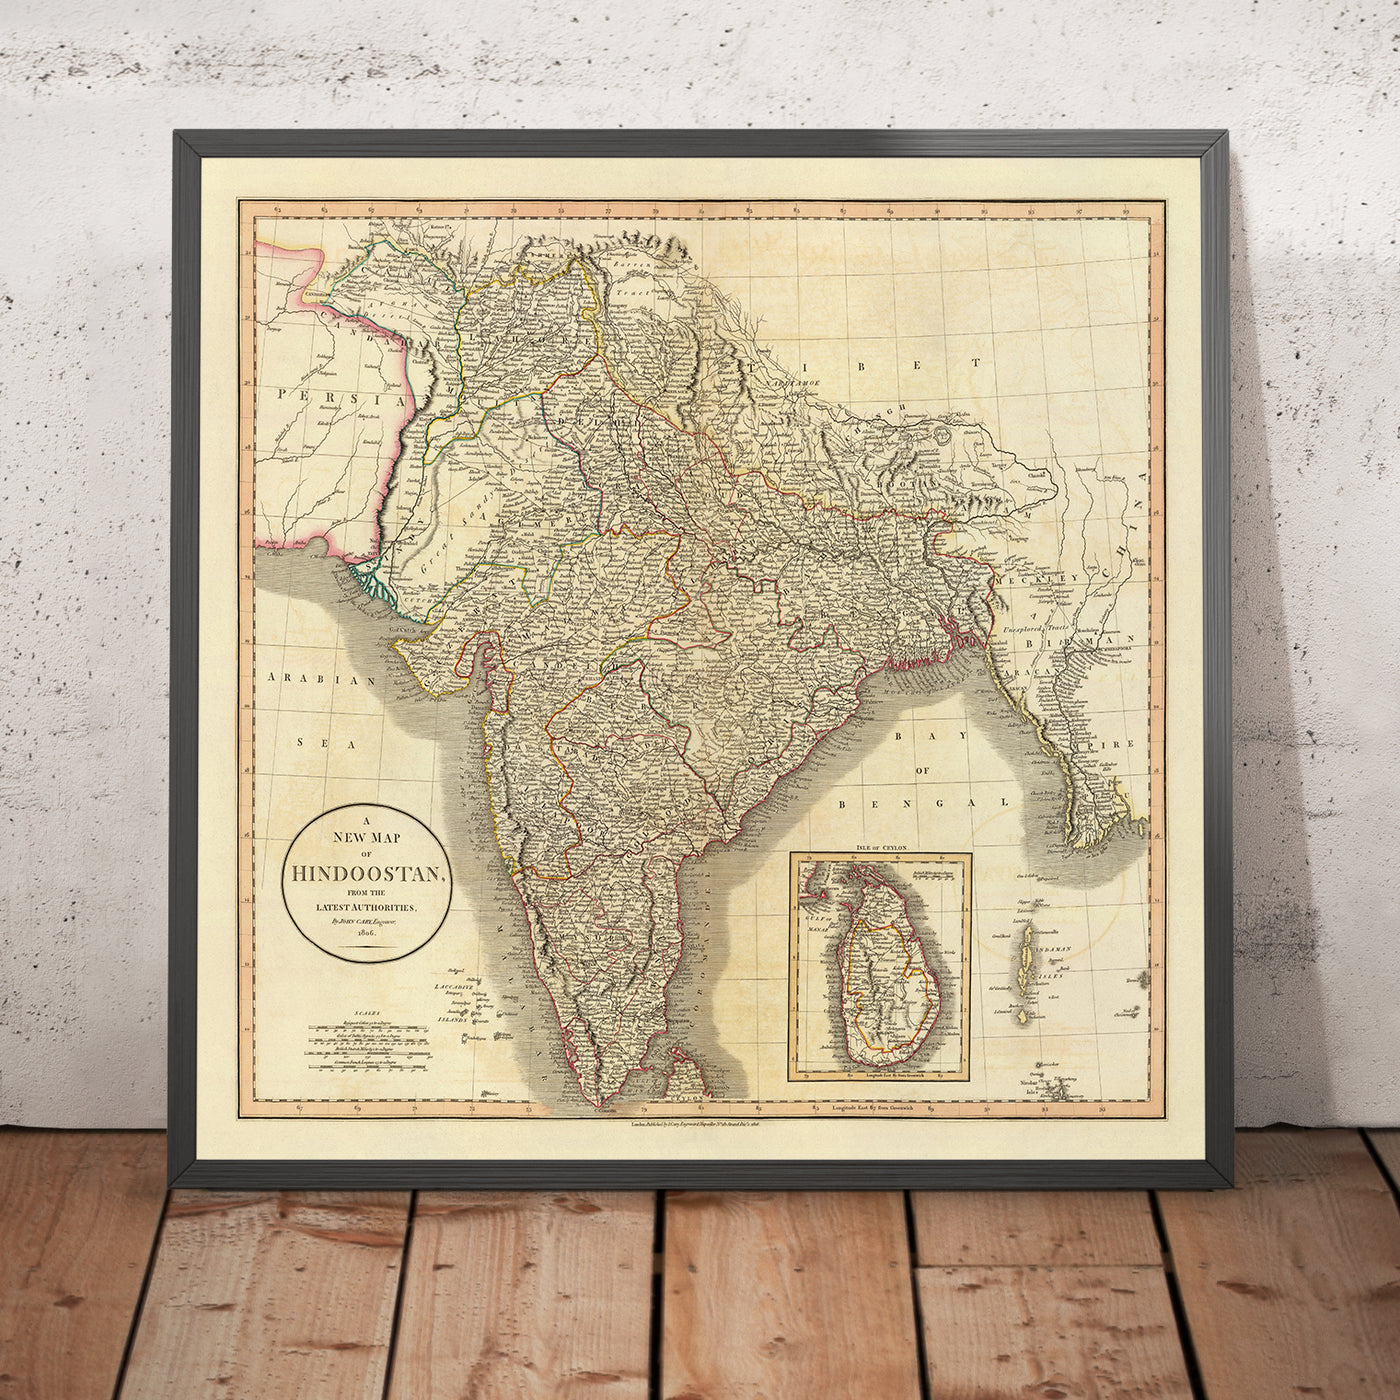 Old Map of India, Pakistan & Bangladesh by Cary, 1806: Hindoostan, Isle of Ceylon, Andaman Isles, Kabul and Kandahar Provinces